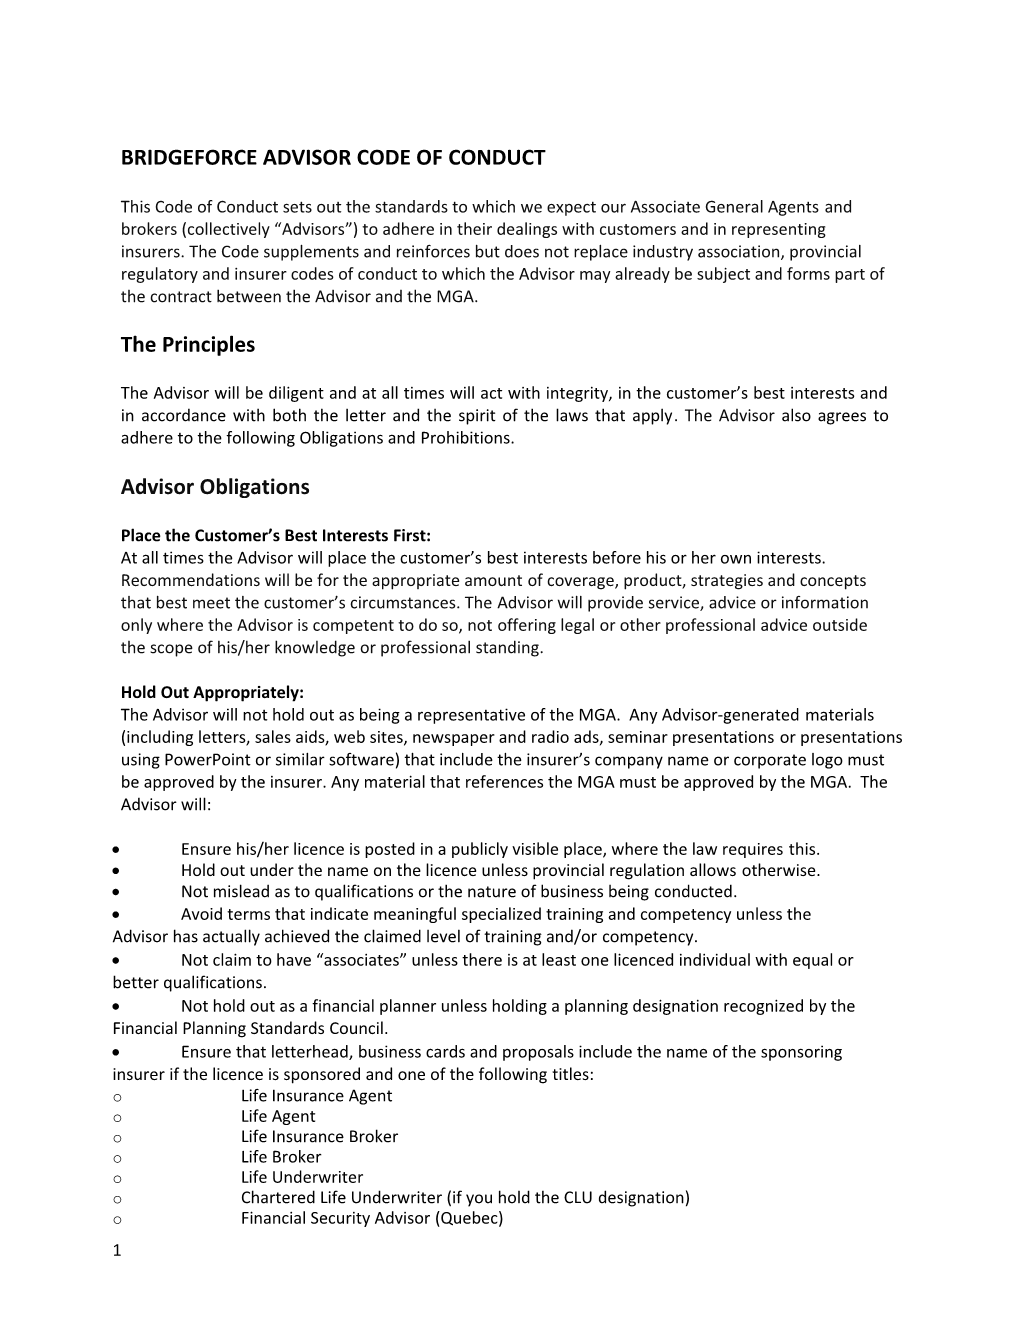 Bridgeforce Advisor Code of Conduct